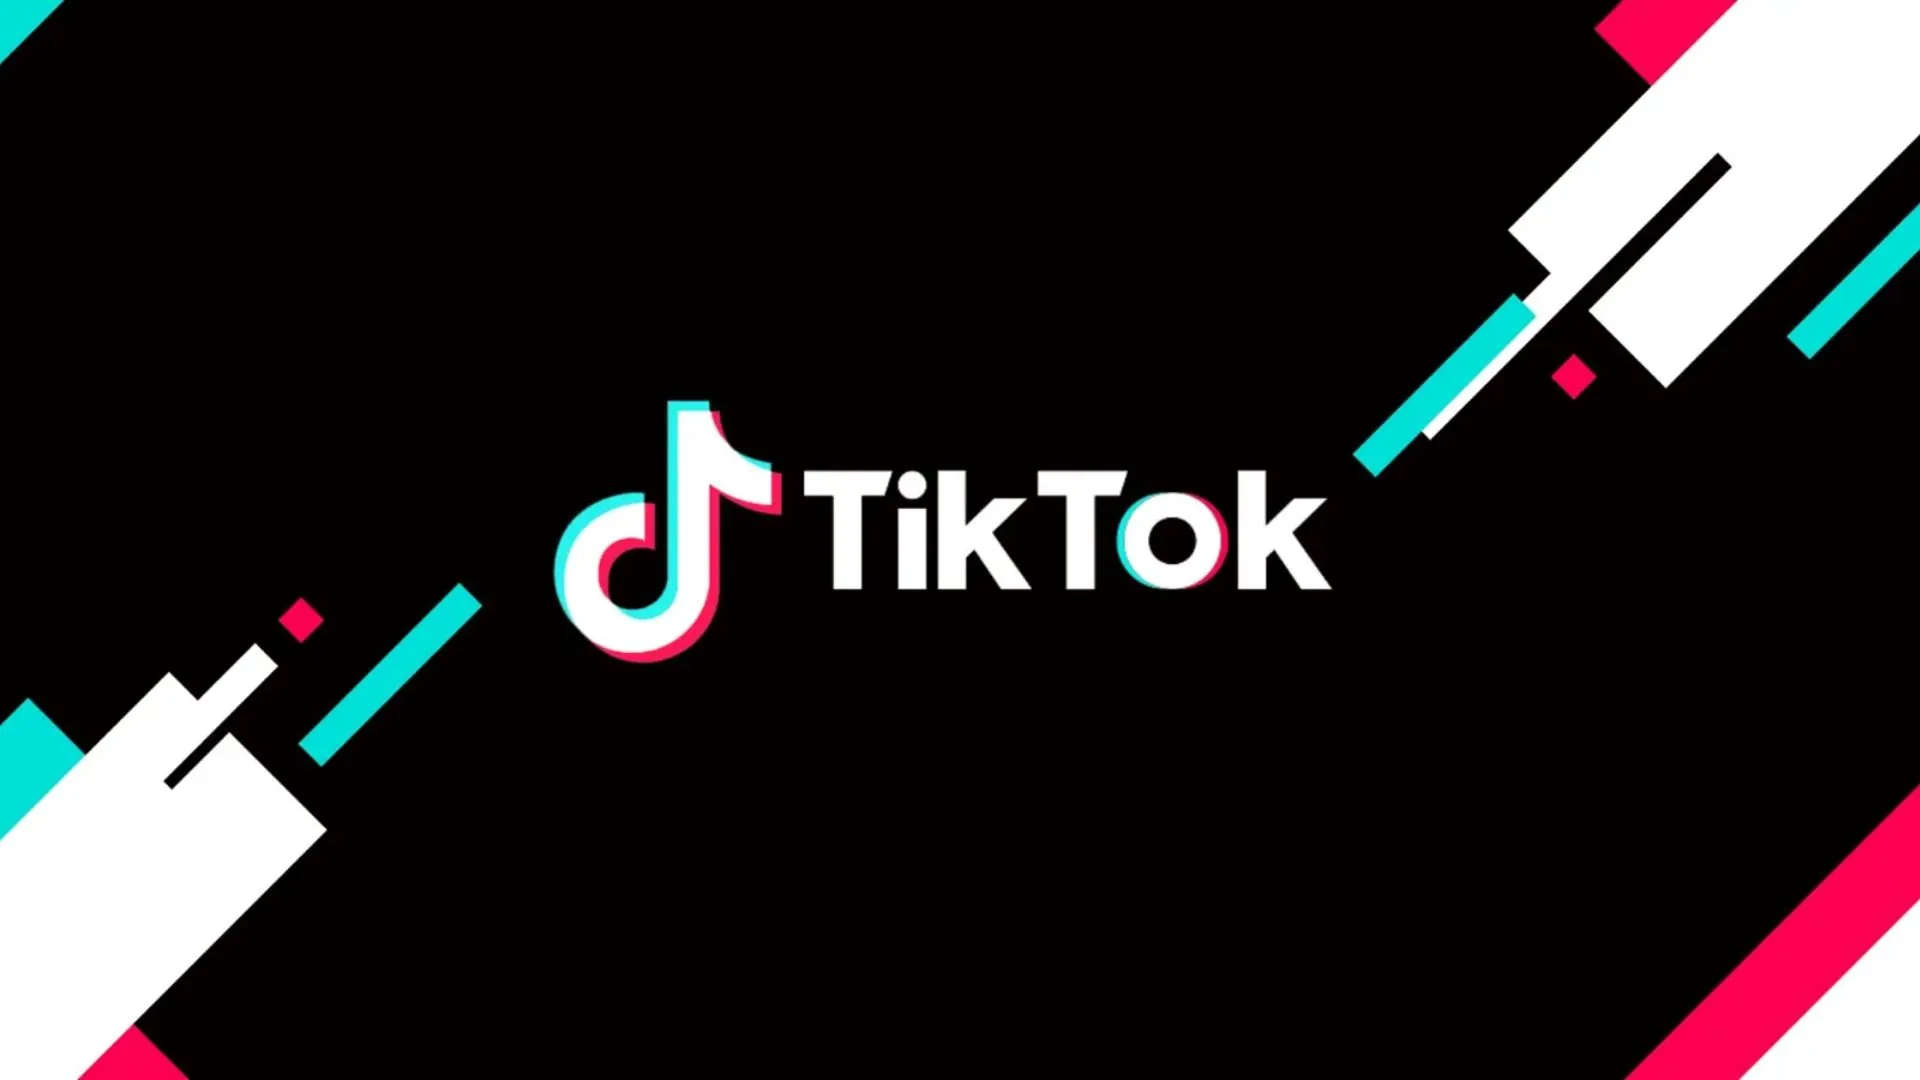 List of 10 Most Followed TikTok Accounts in the World